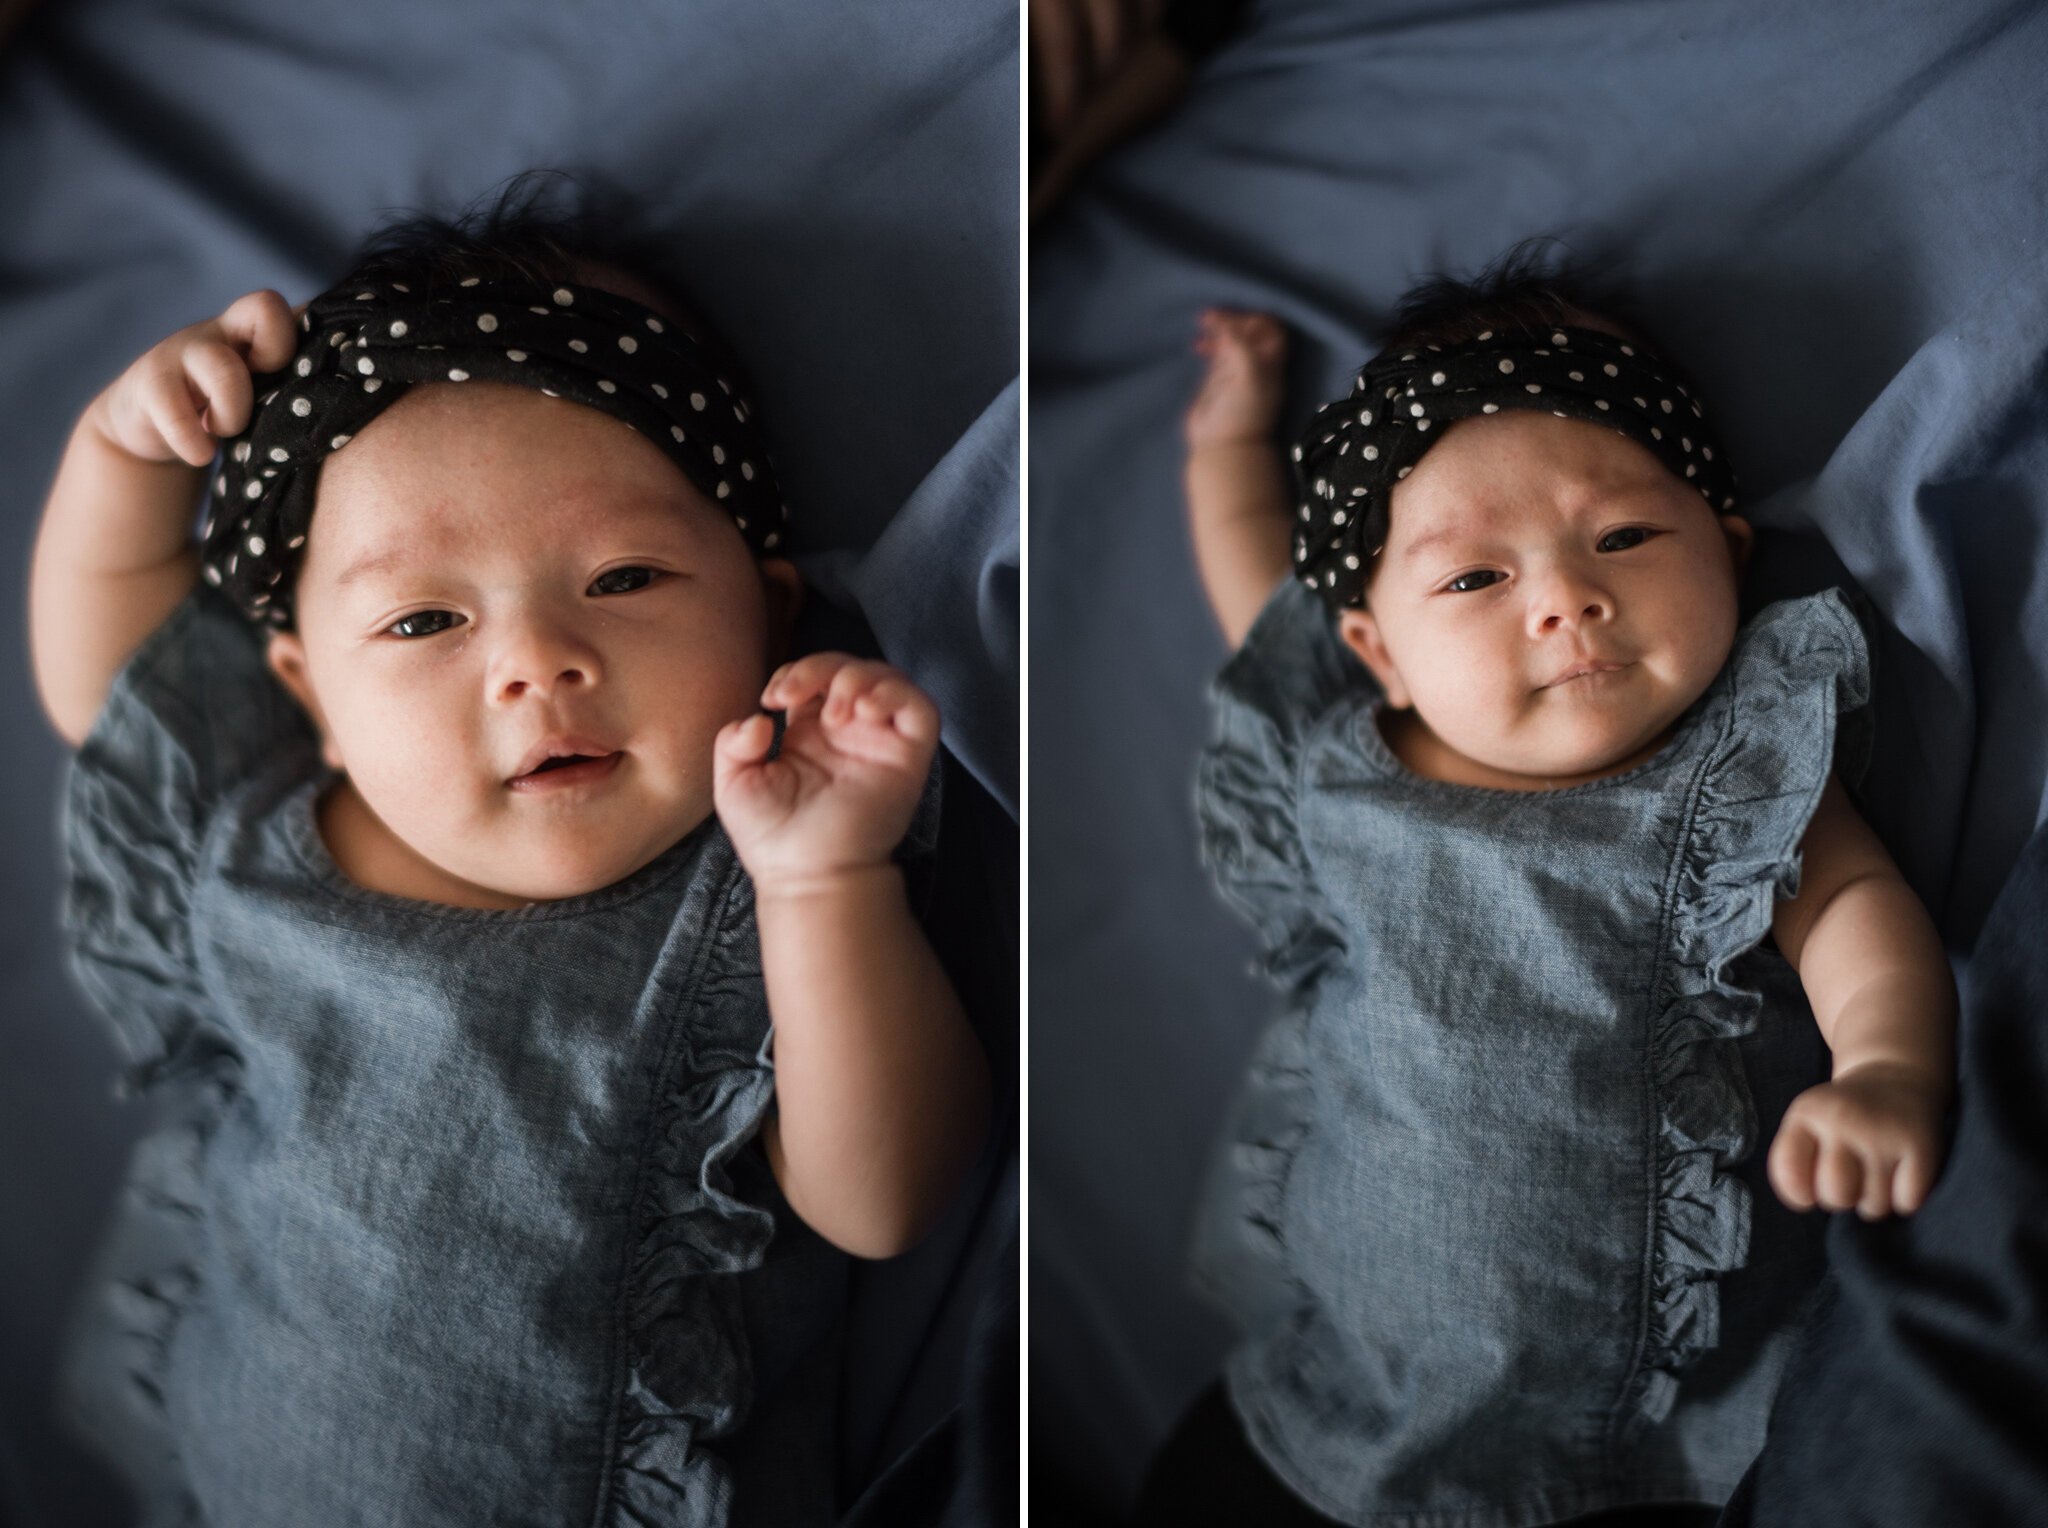 964-newborn-portraits-family-photoshoot-at-home-indoors-toronto-markham.jpg